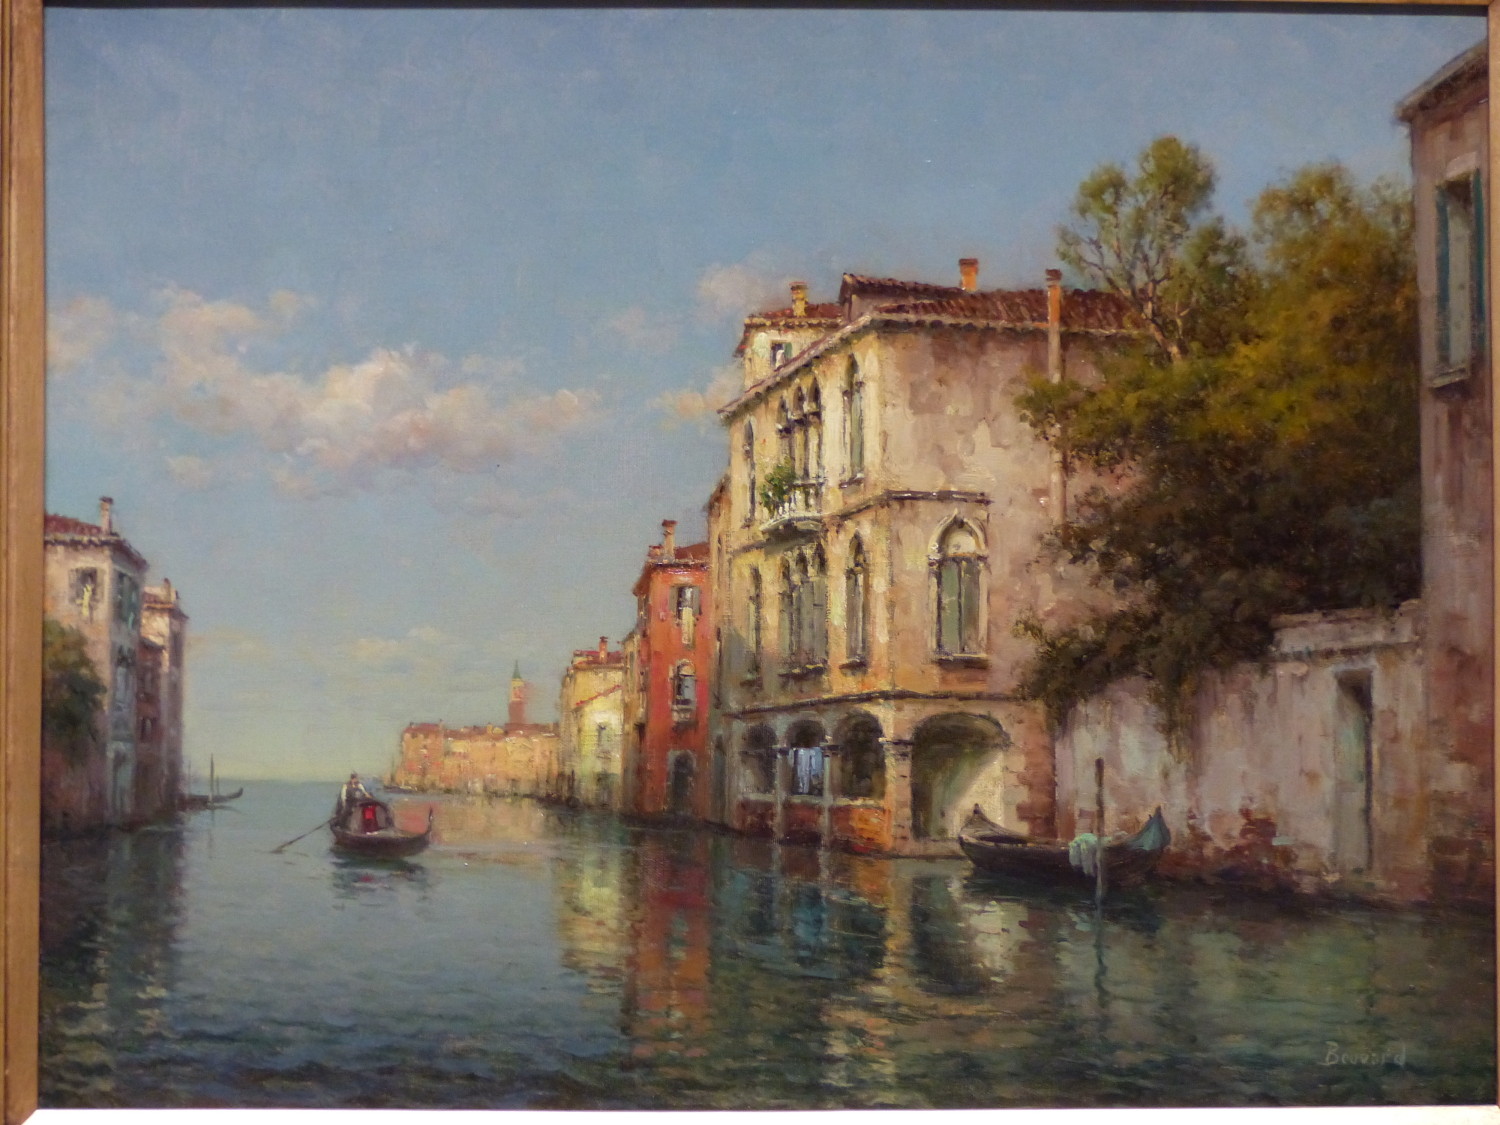 ANTOINE BOUVARD. (1870-1956) ARR VENETIAN CANAL, SIGNED OIL ON CANVAS, PROVENANCE: HAYNES FINE ART